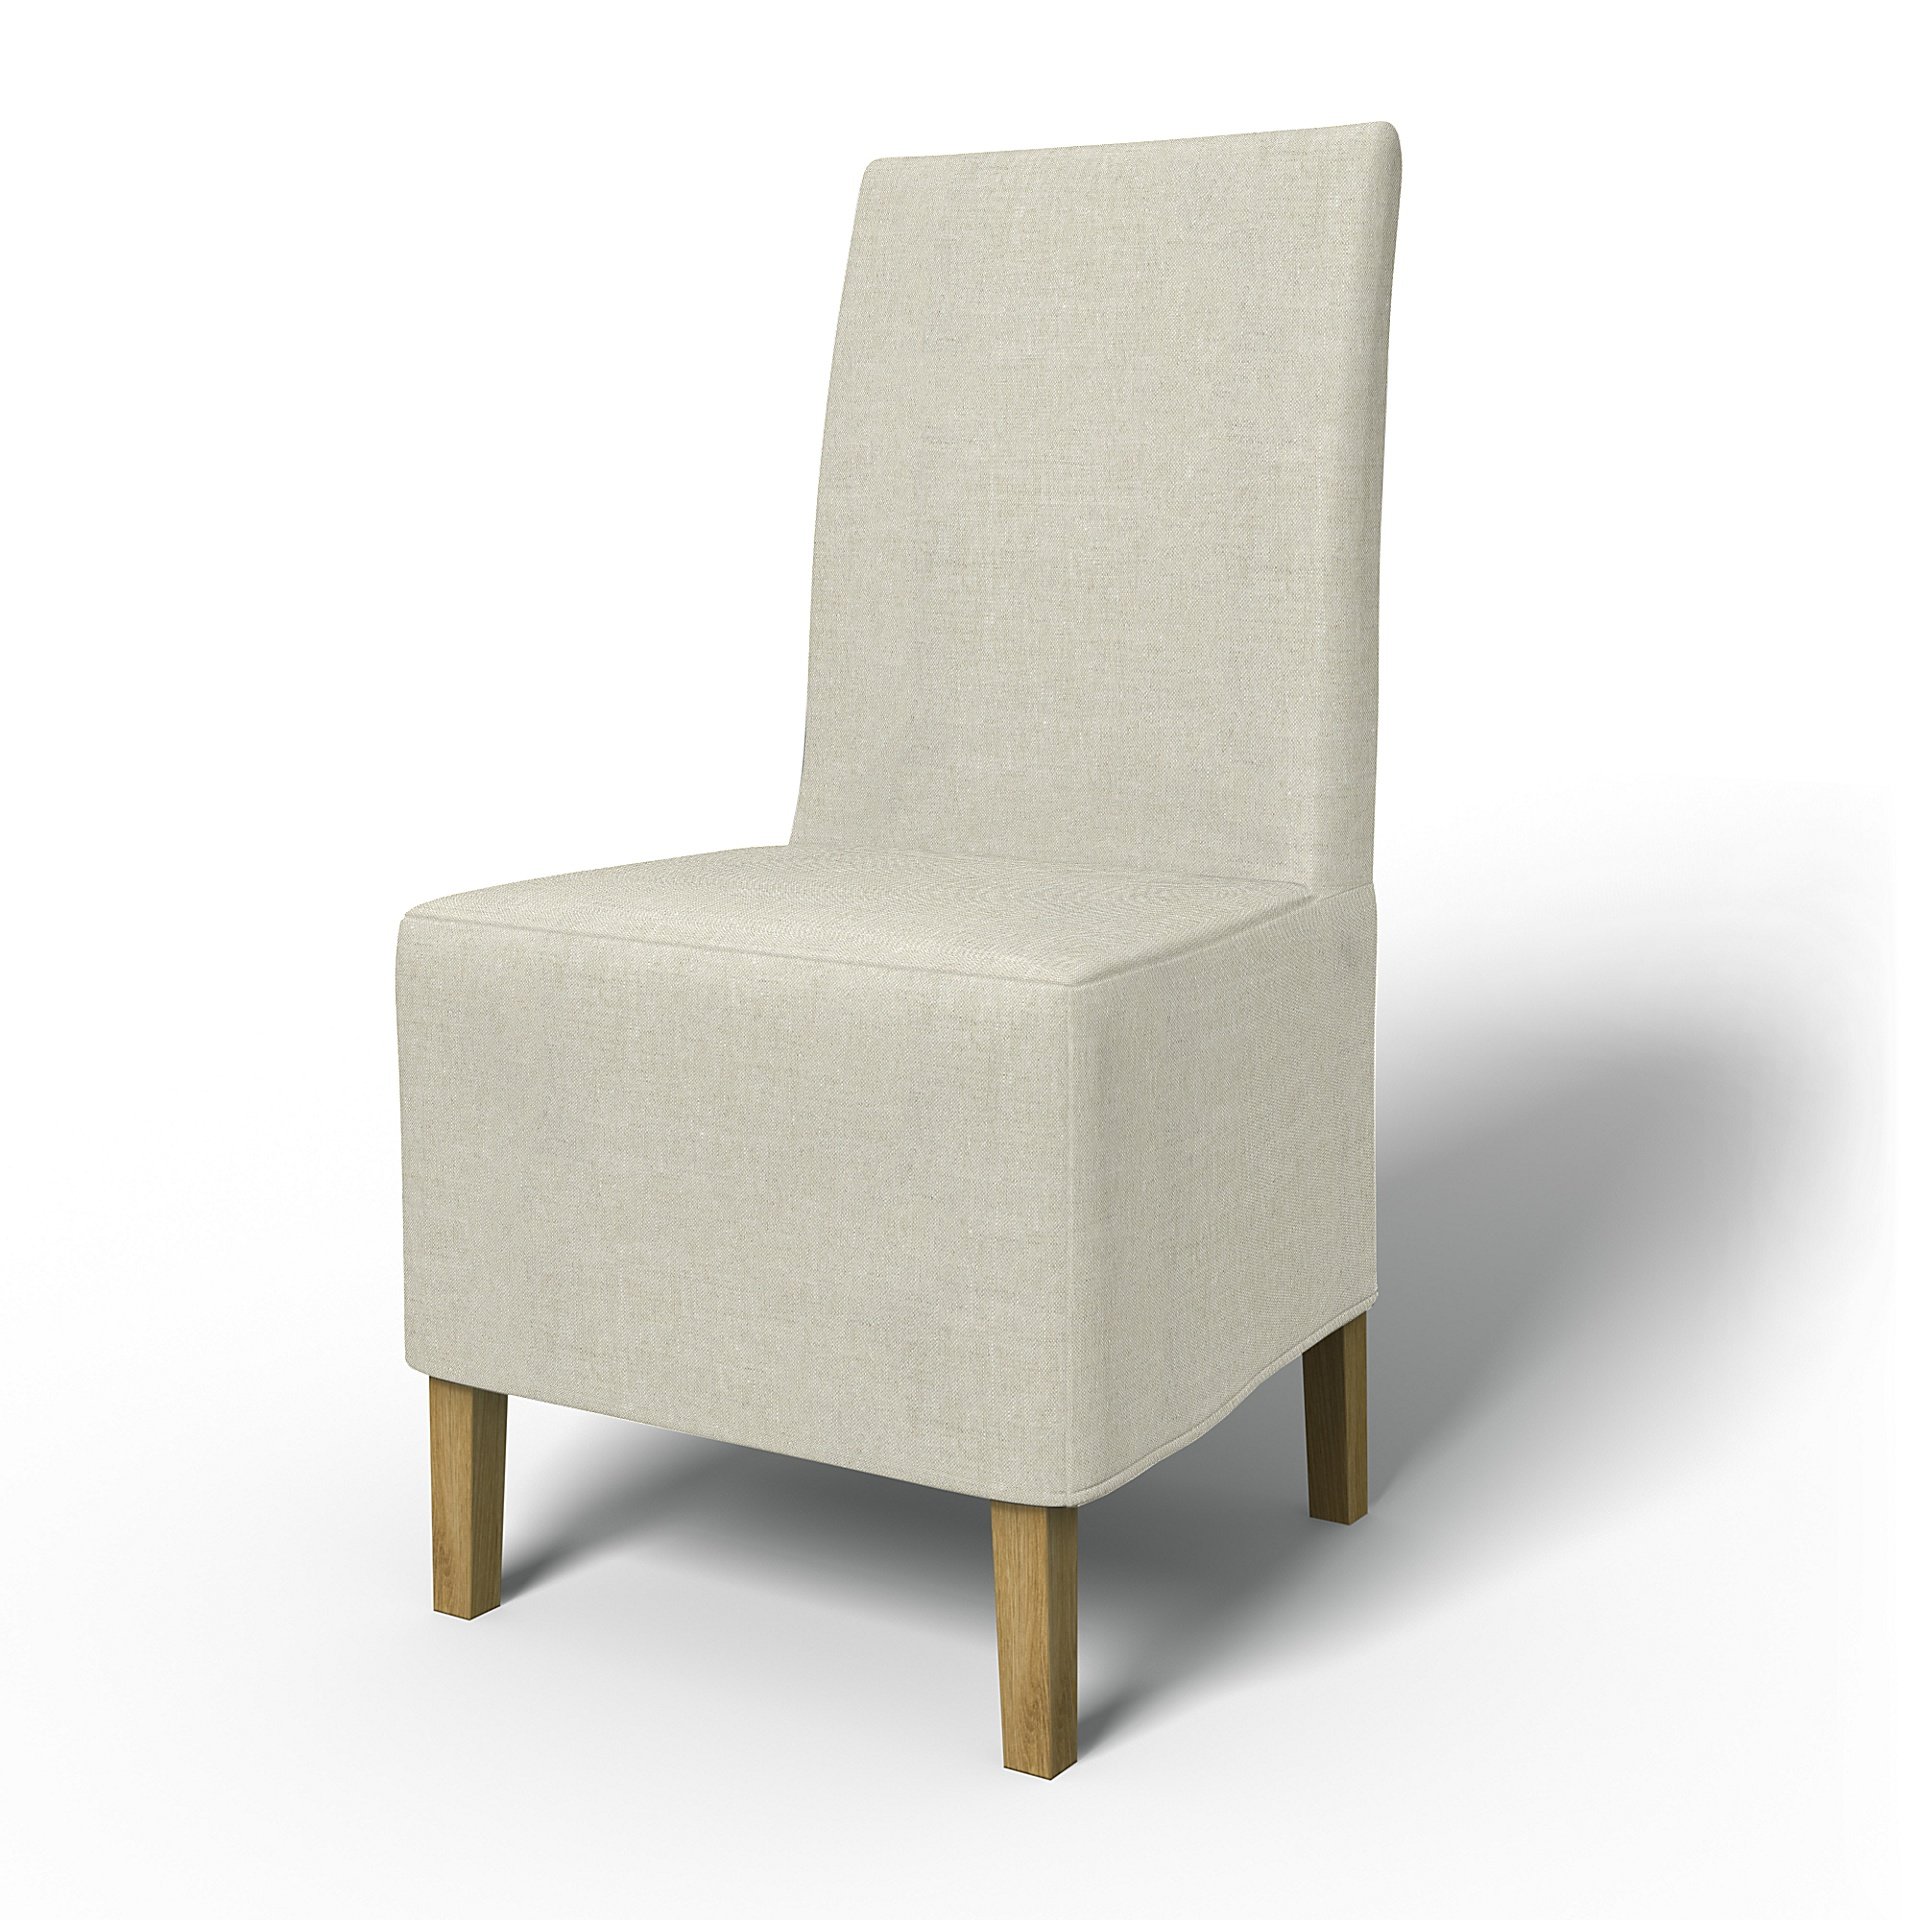 IKEA - Henriksdal Dining Chair Cover Medium skirt (Standard model), Natural, Linen - Bemz